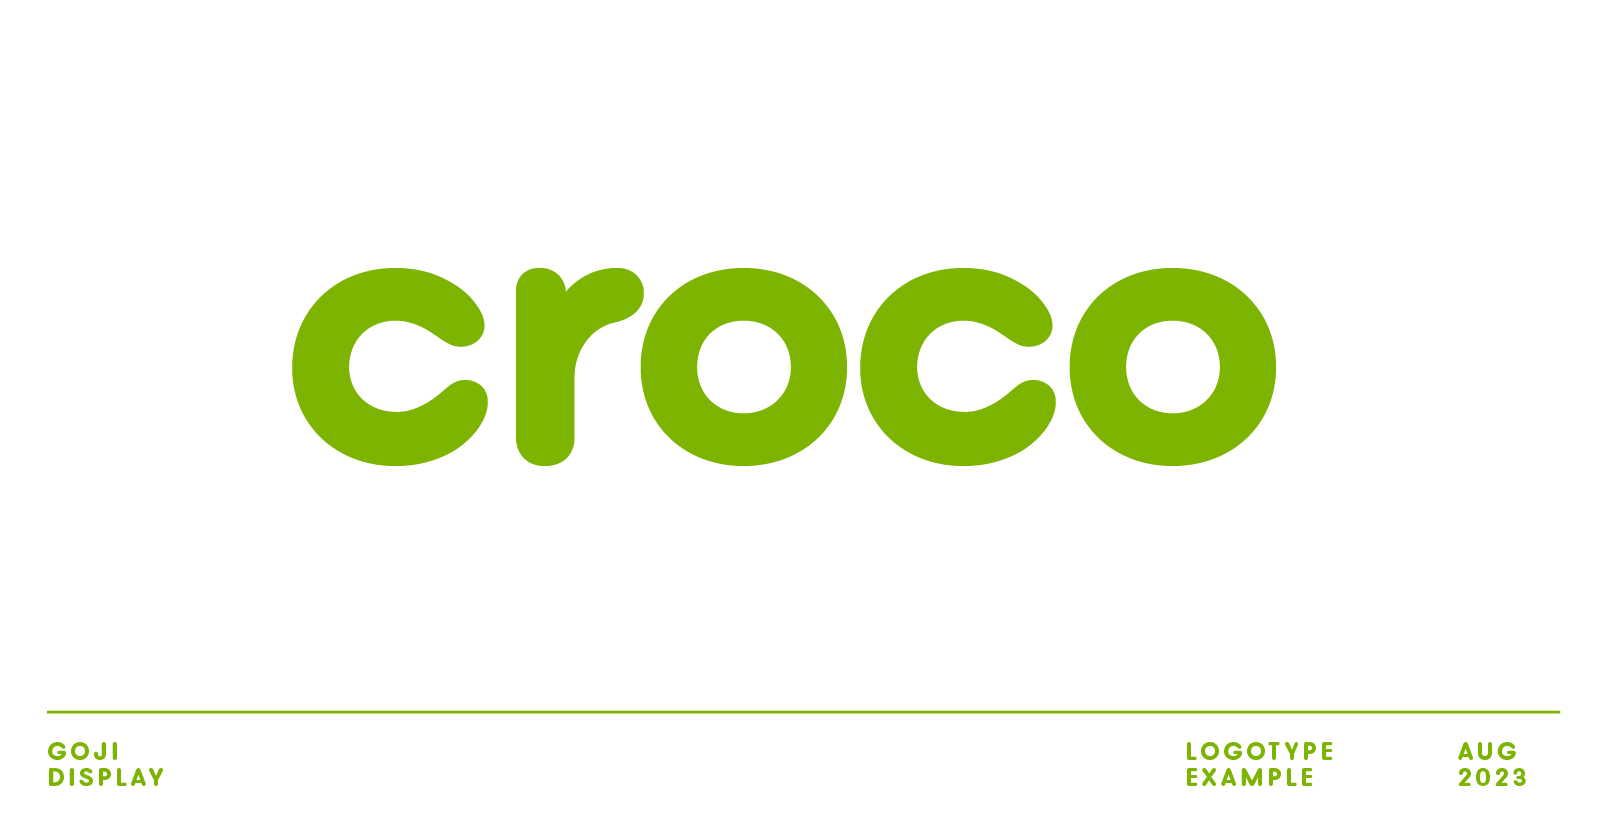 logotype example similar to Crocs